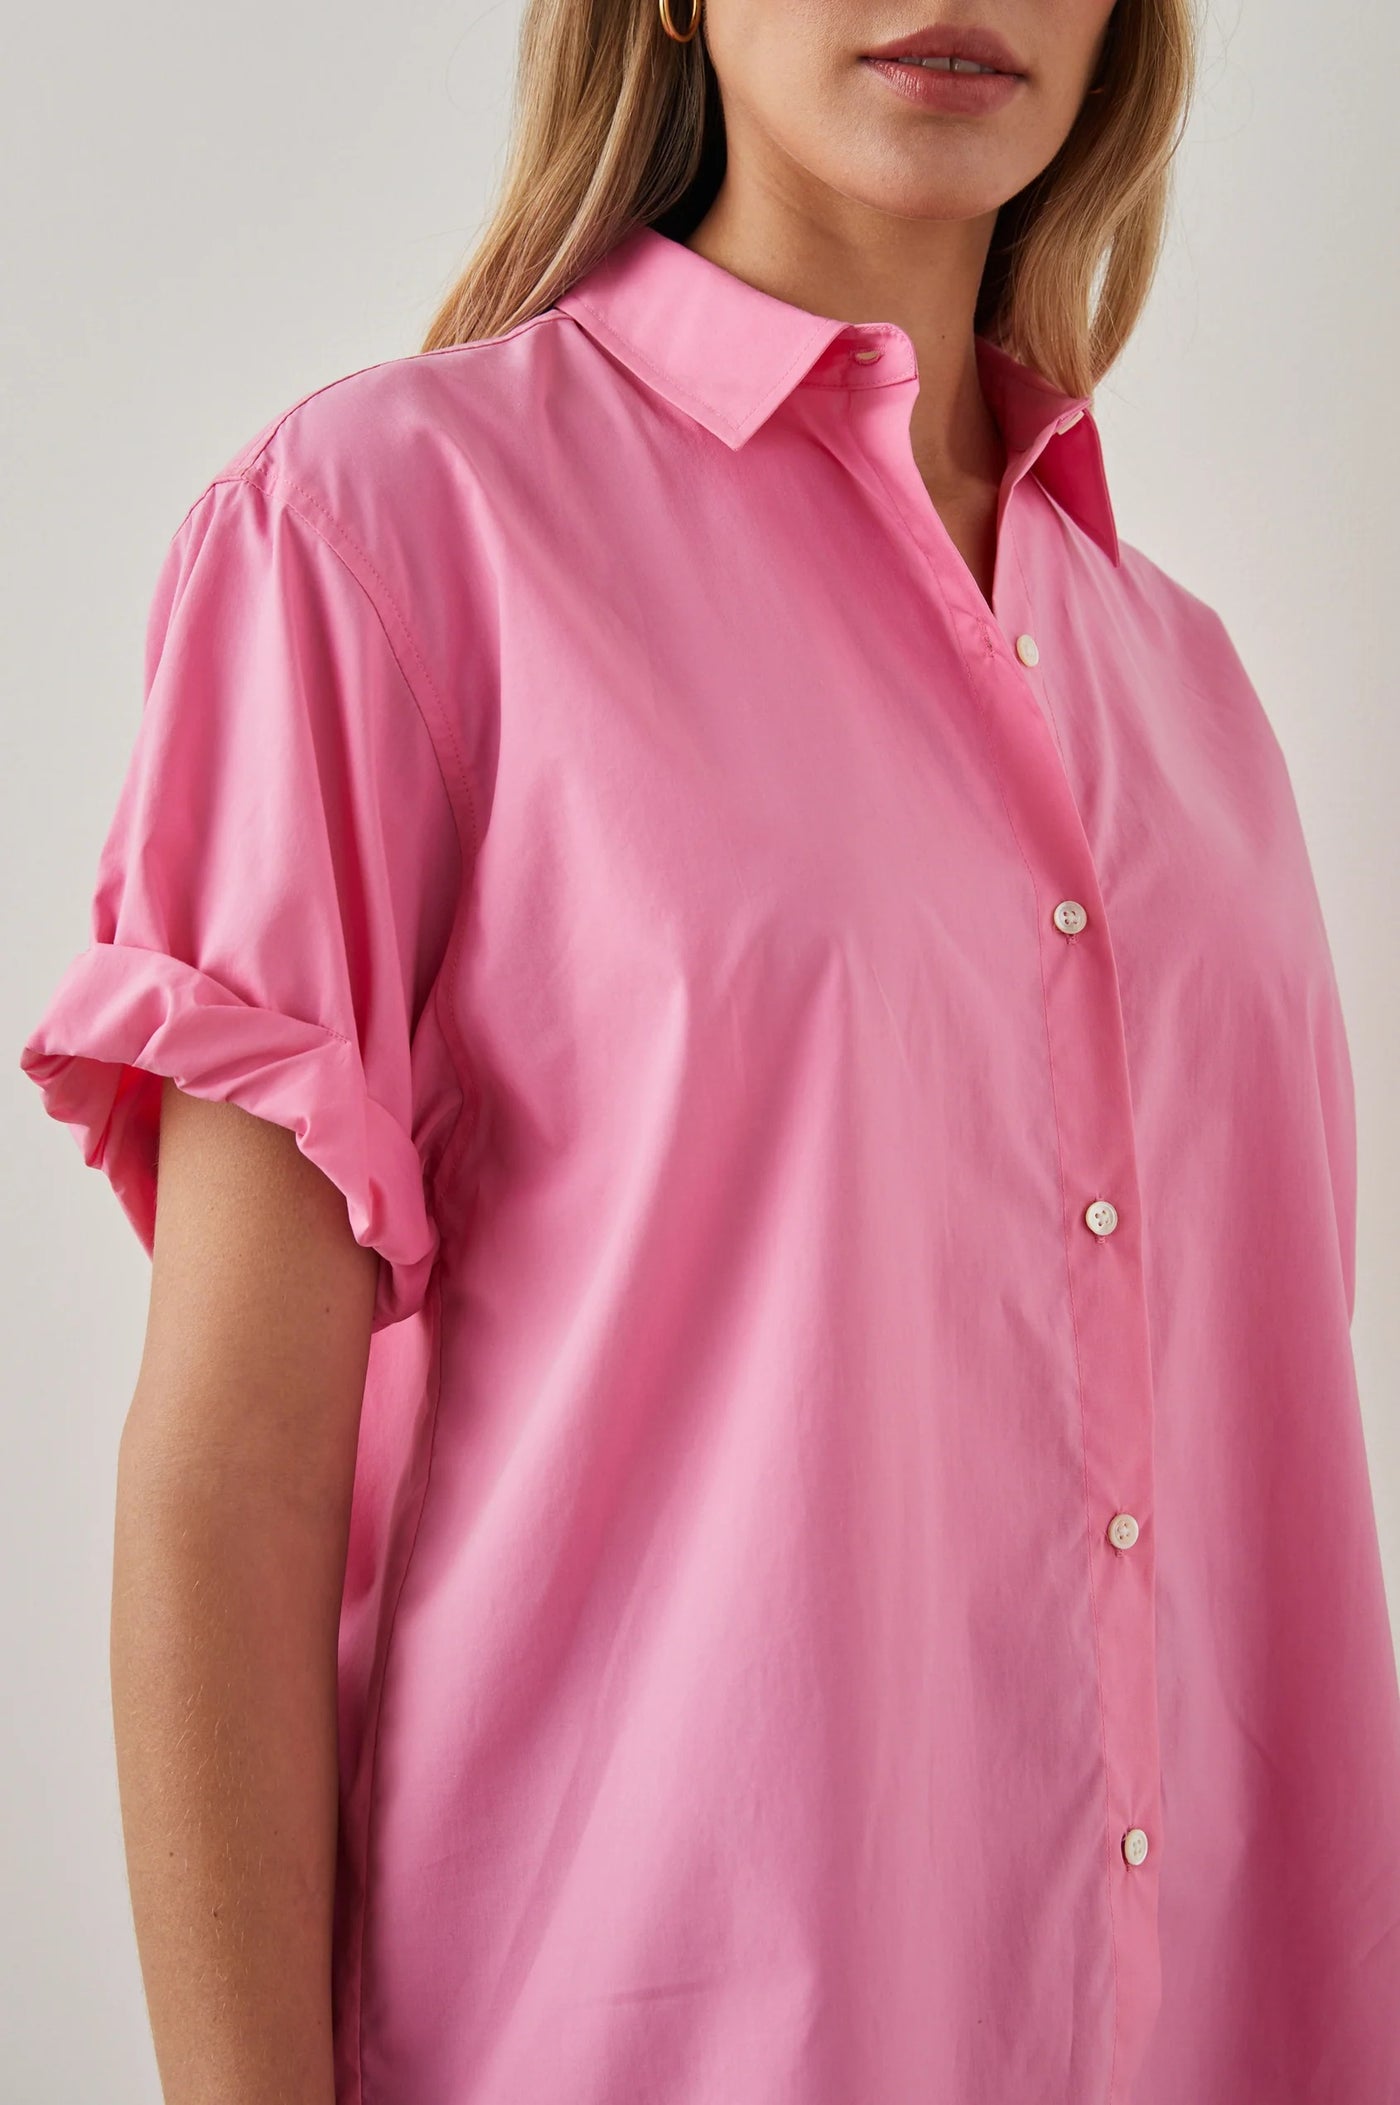 Jojo Shirt in Hot Pink